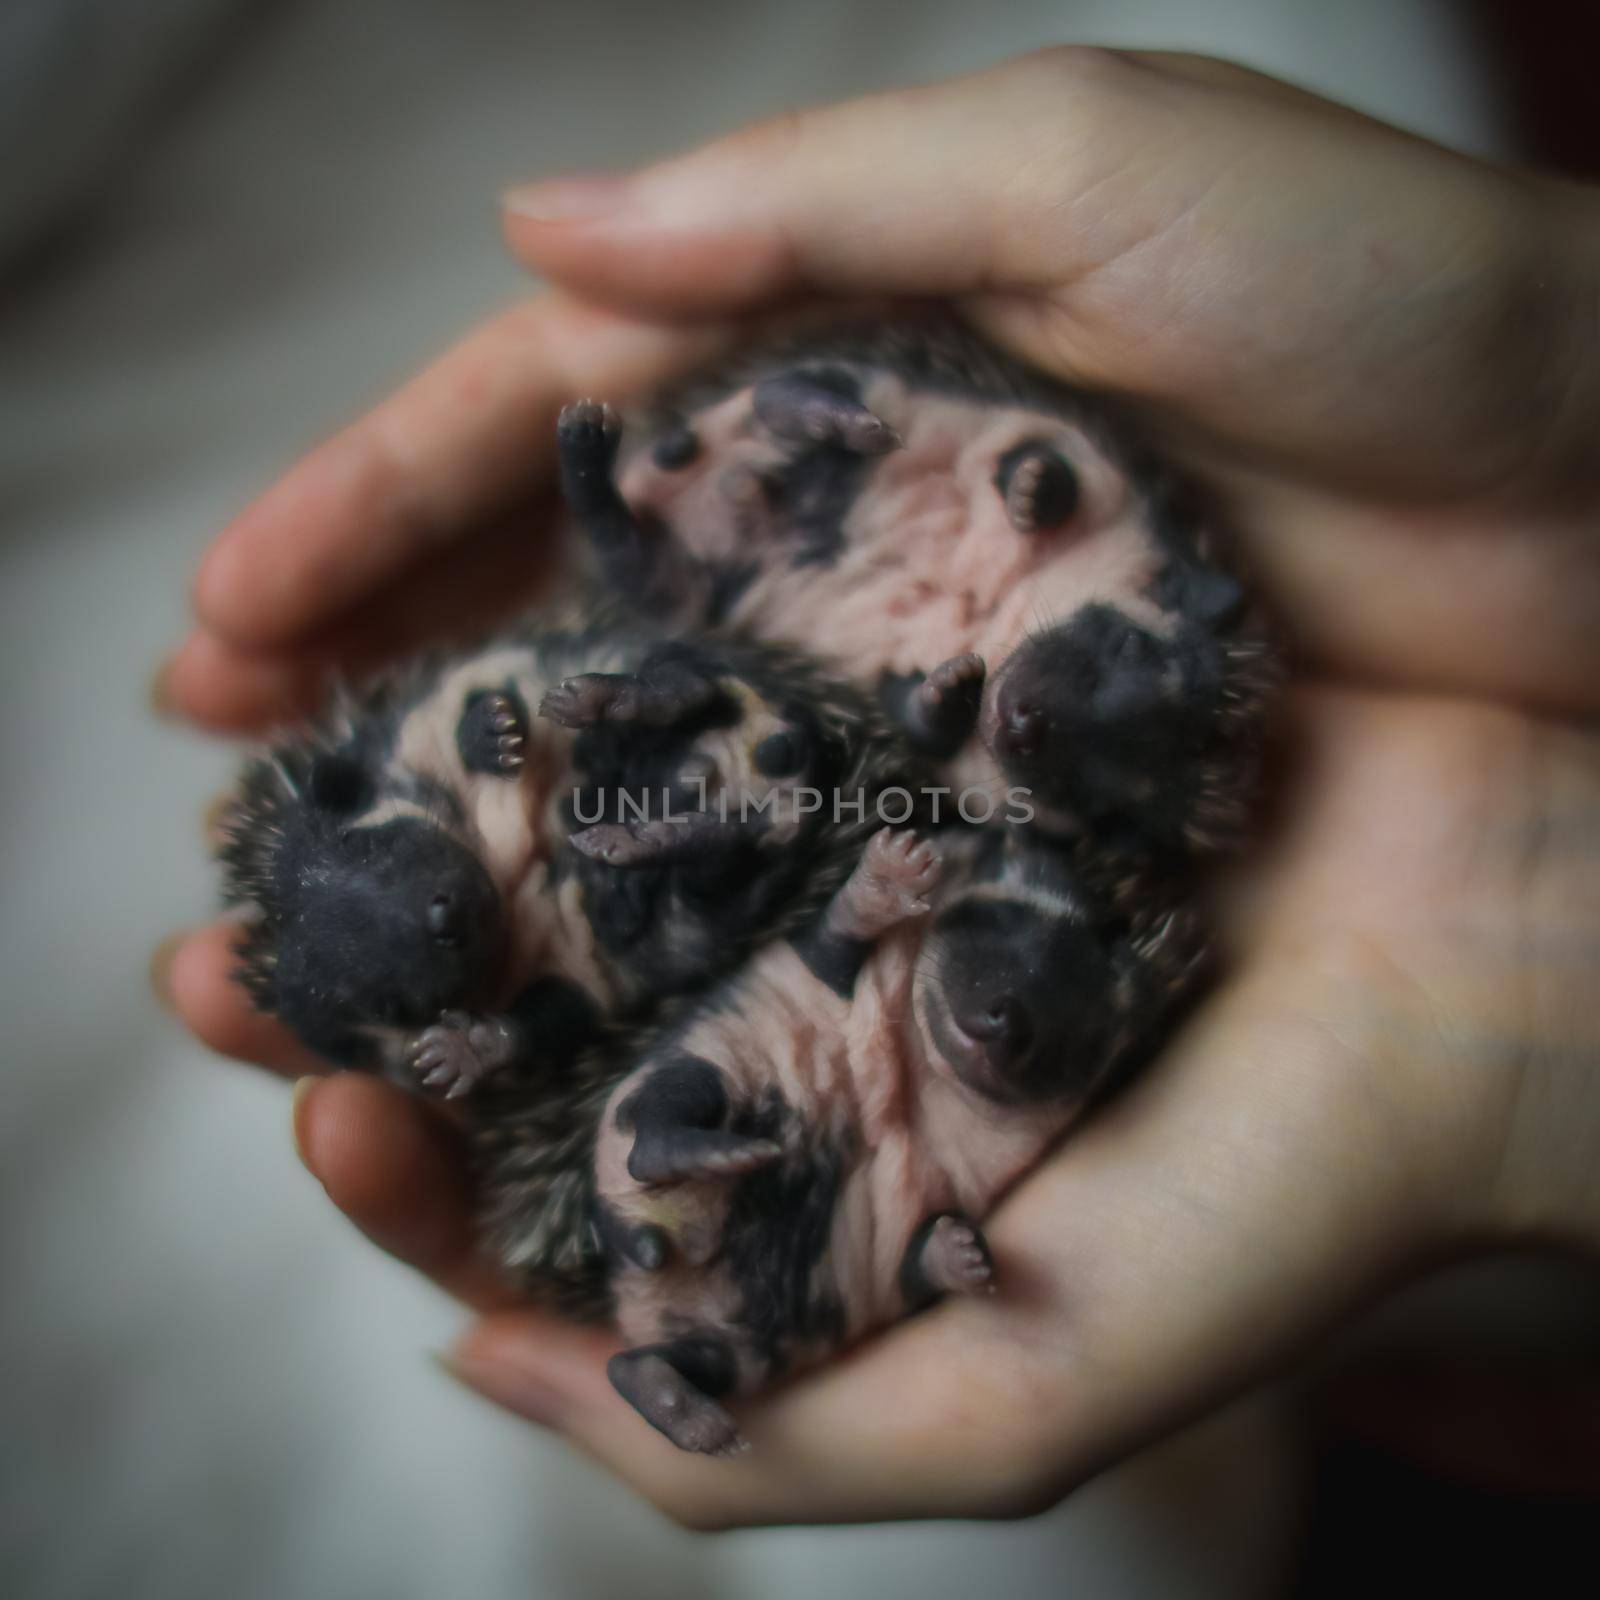 Domesticated hedgehog babies or African pygmy hedgehog in hands